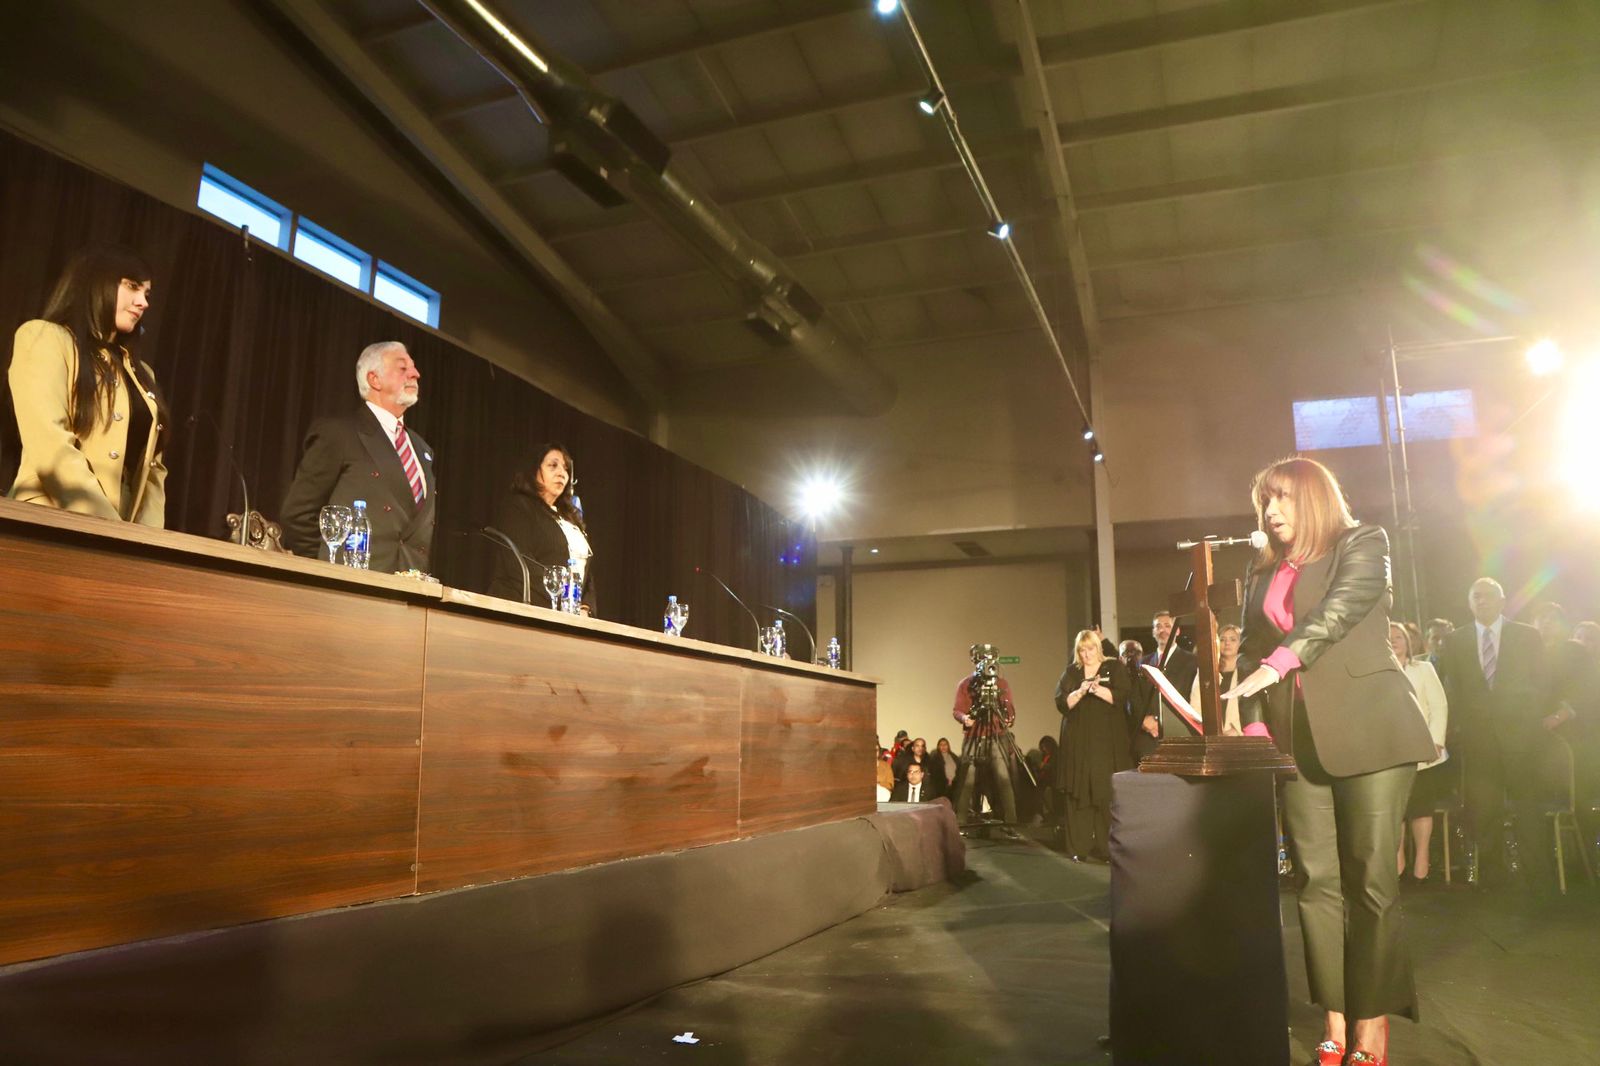 Ada Maza electa Presidenta de la Convención Constituyente